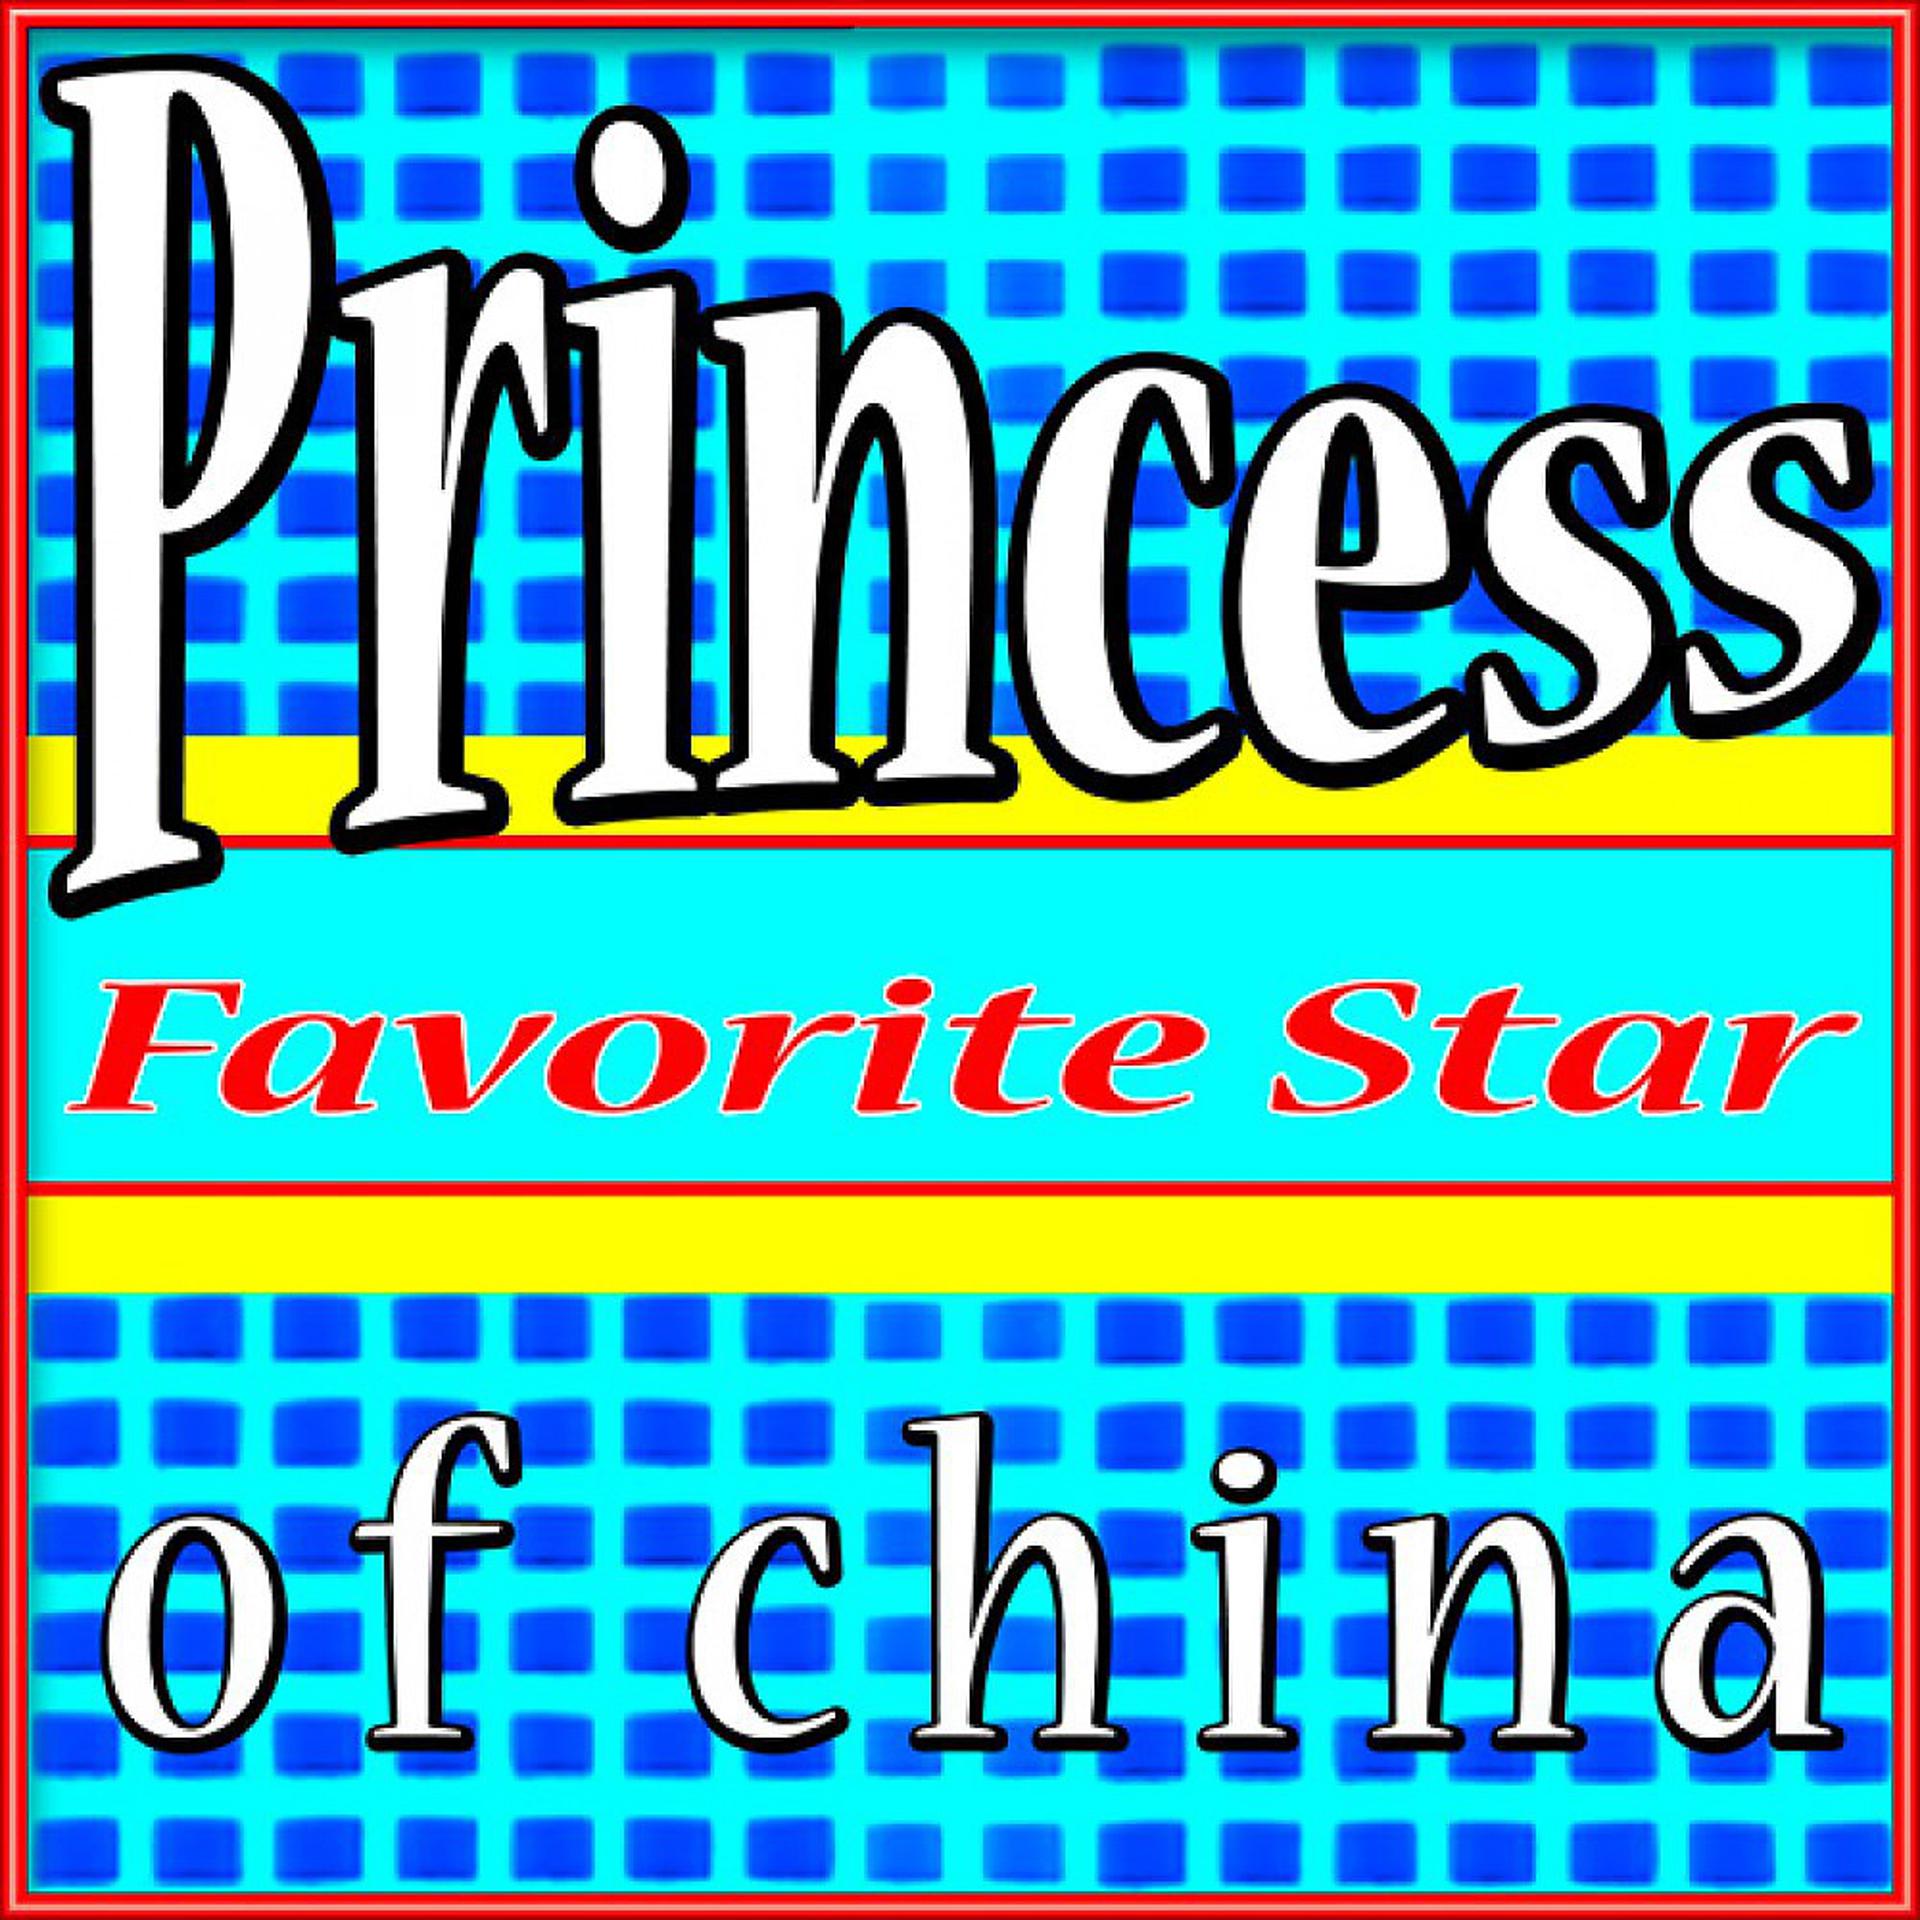 Постер альбома Princess of China